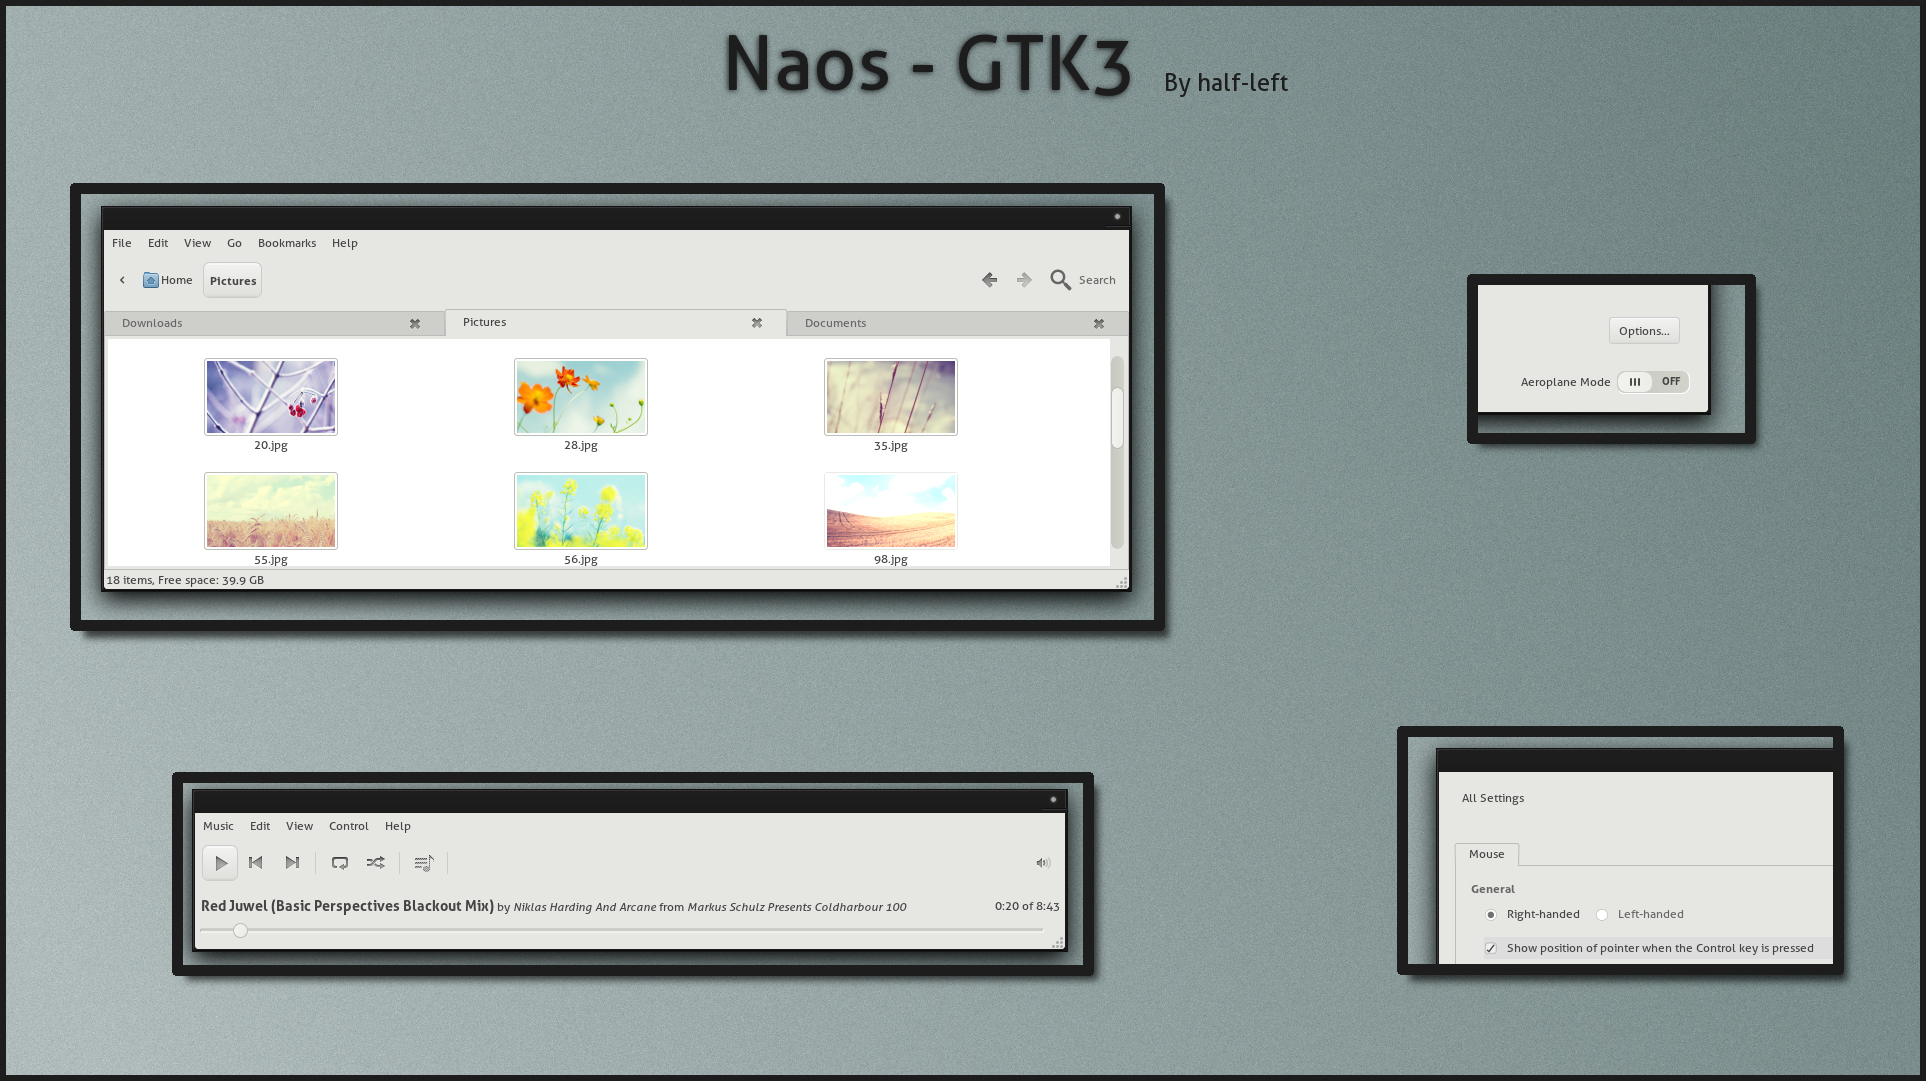 Naos - GTK3